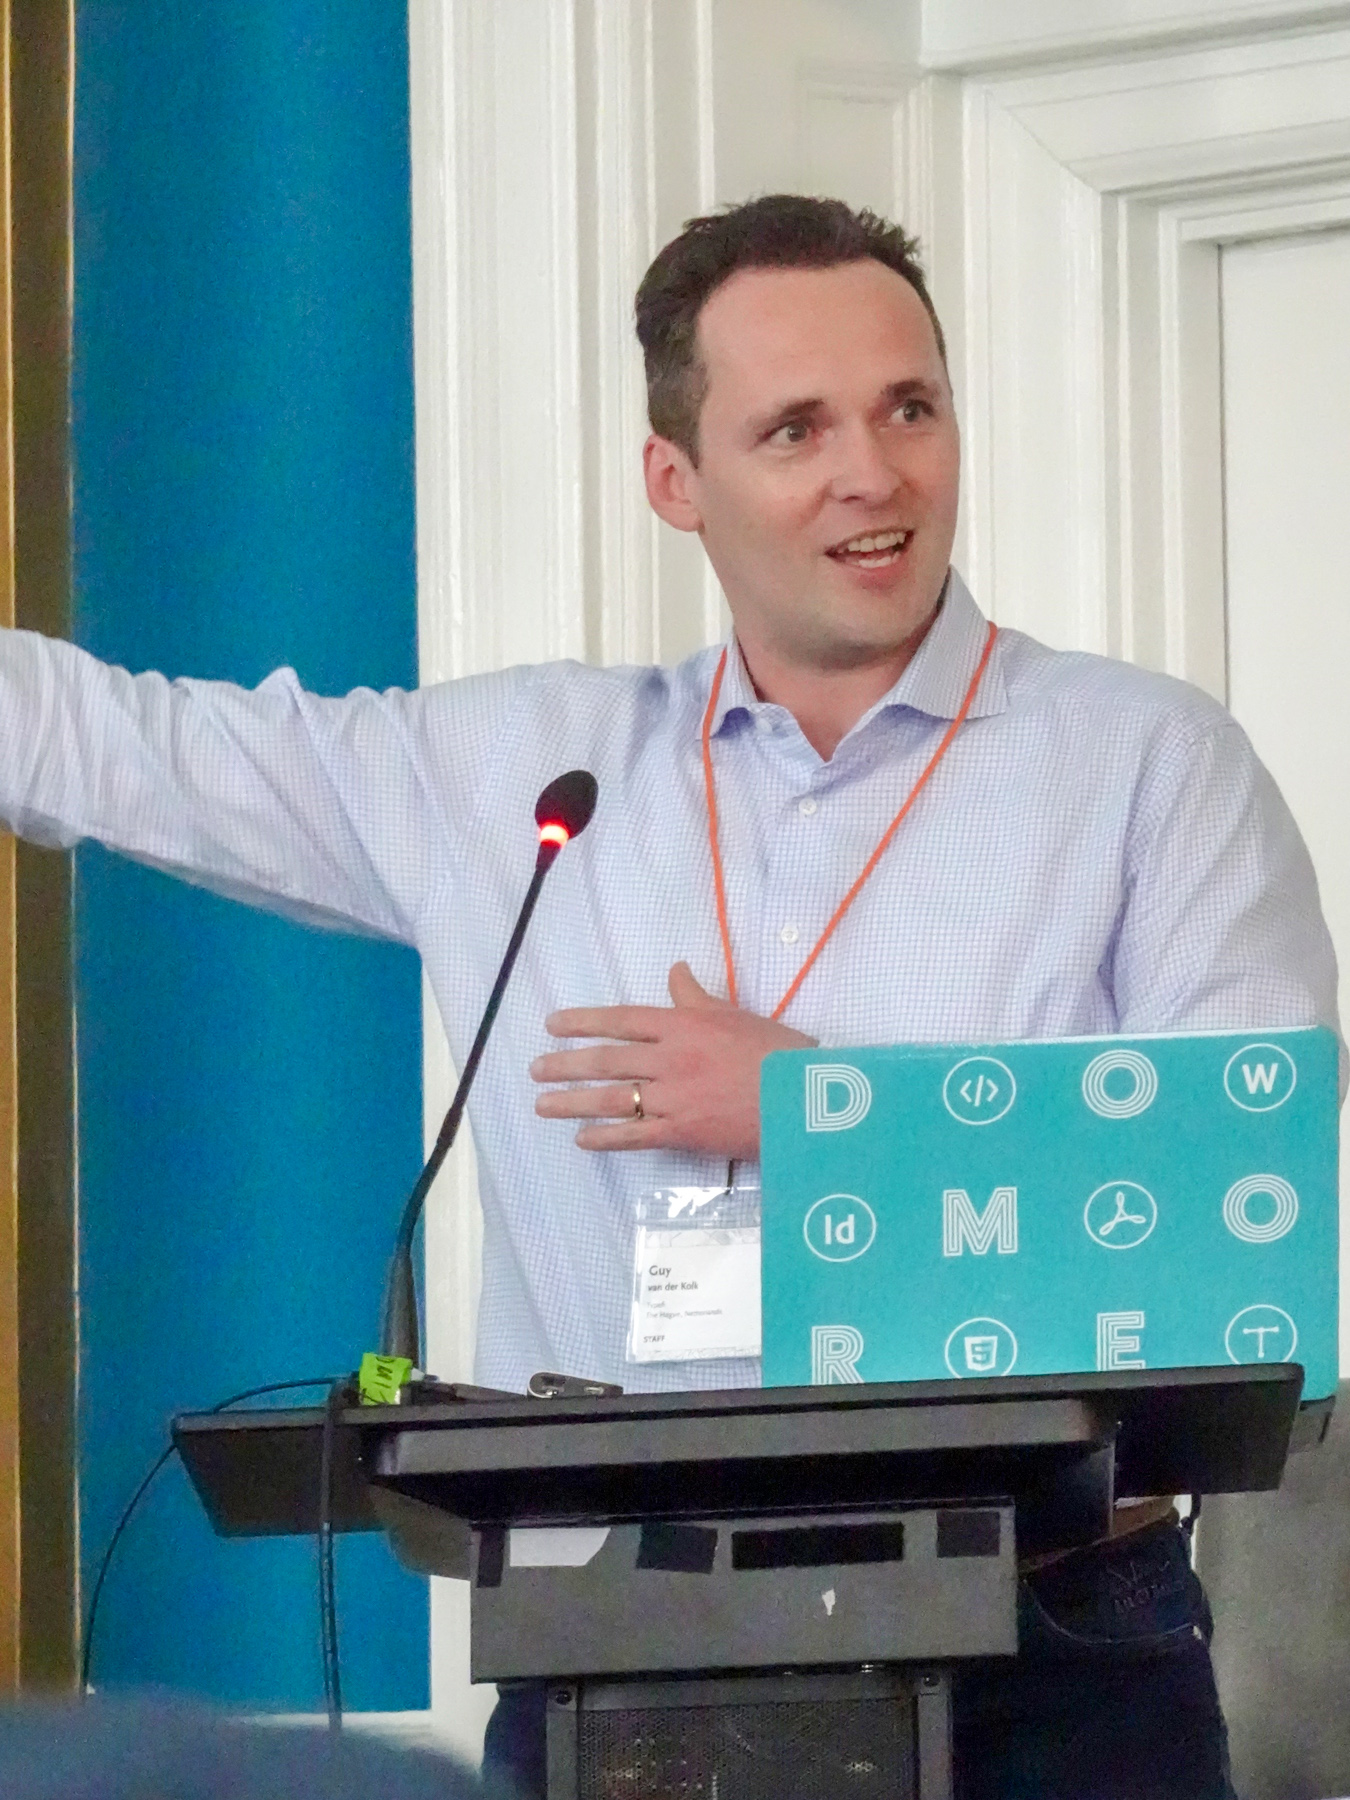 Guy van der Kolk gestures at the screen during his 2019 Typefi User Conference presentation.